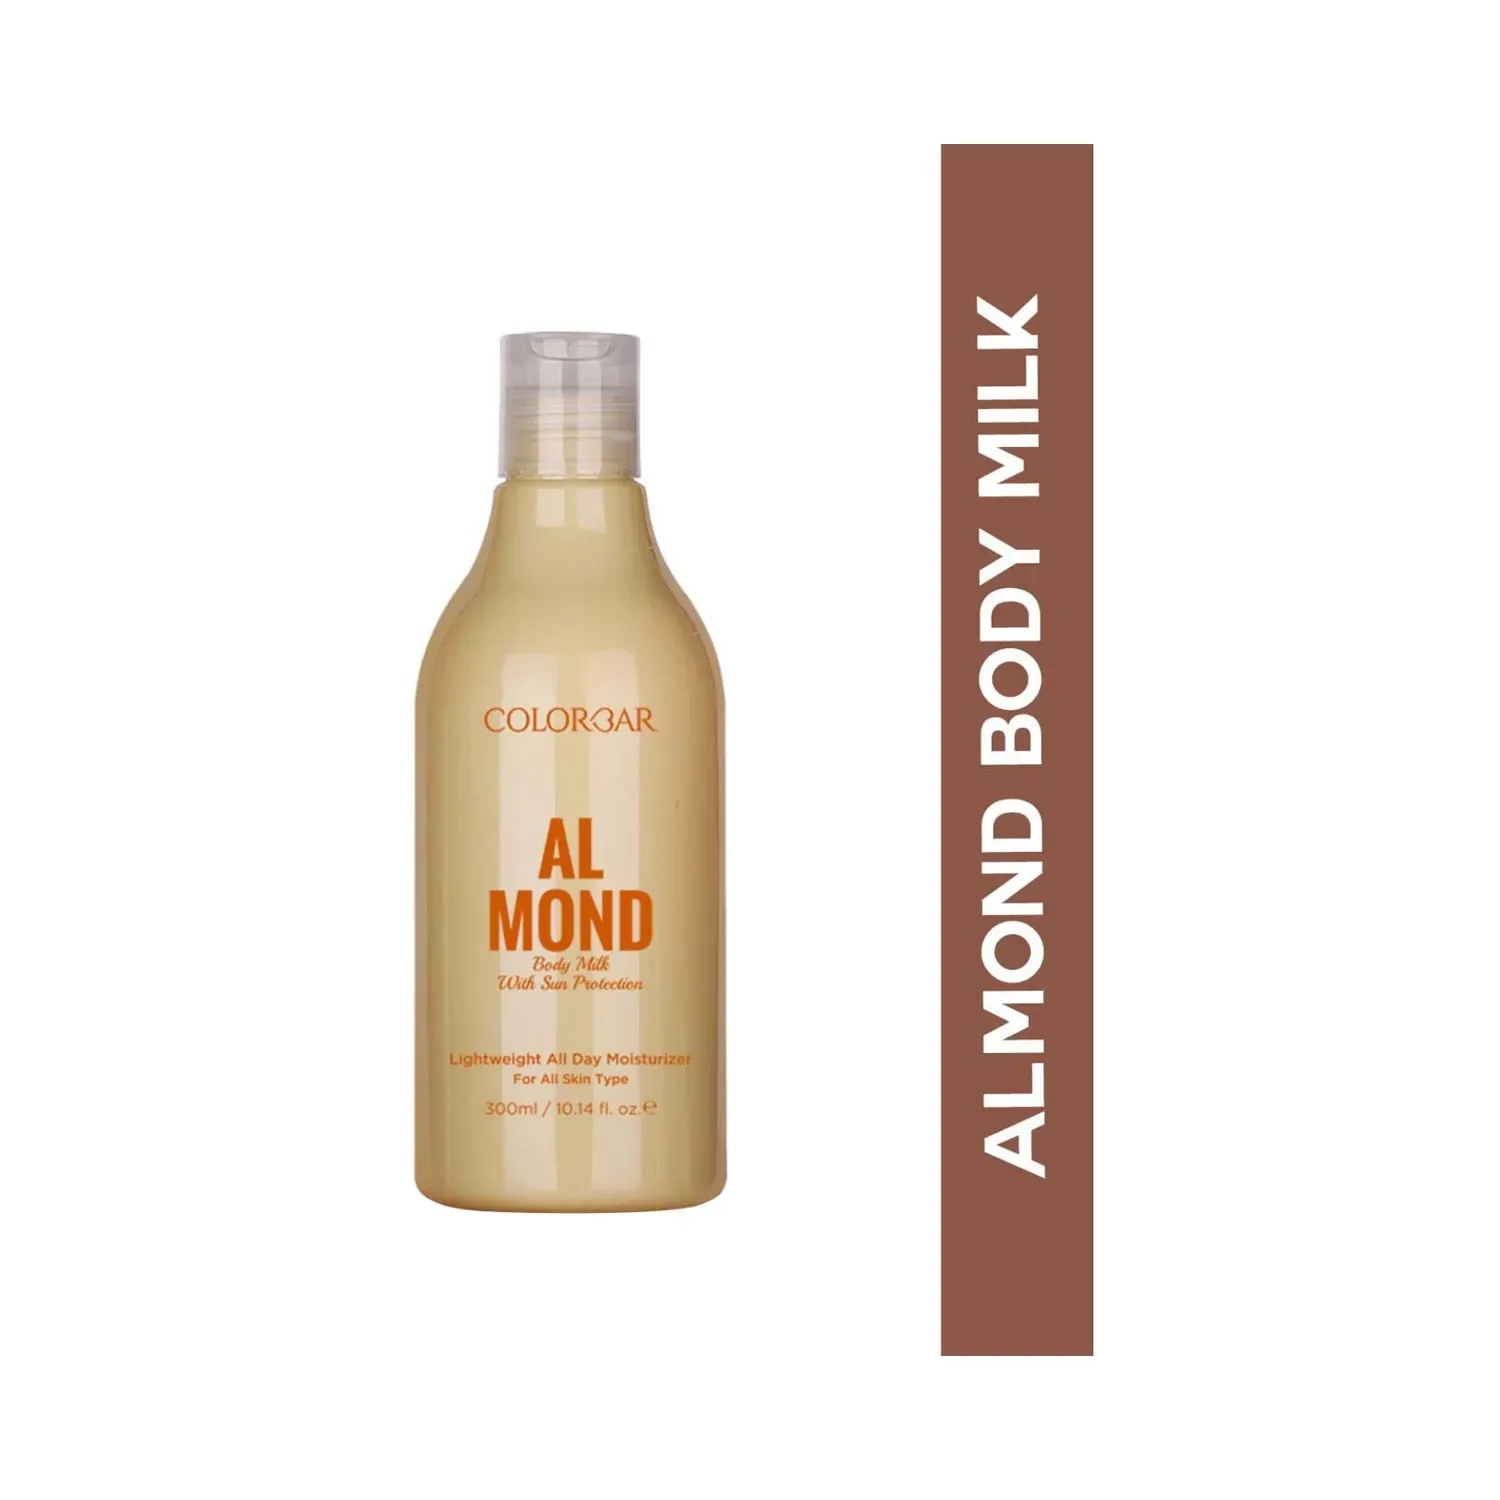 Colorbar | Colorbar Almond Body Milk With Sun Protection Lightweight Moisturiser (300ml)